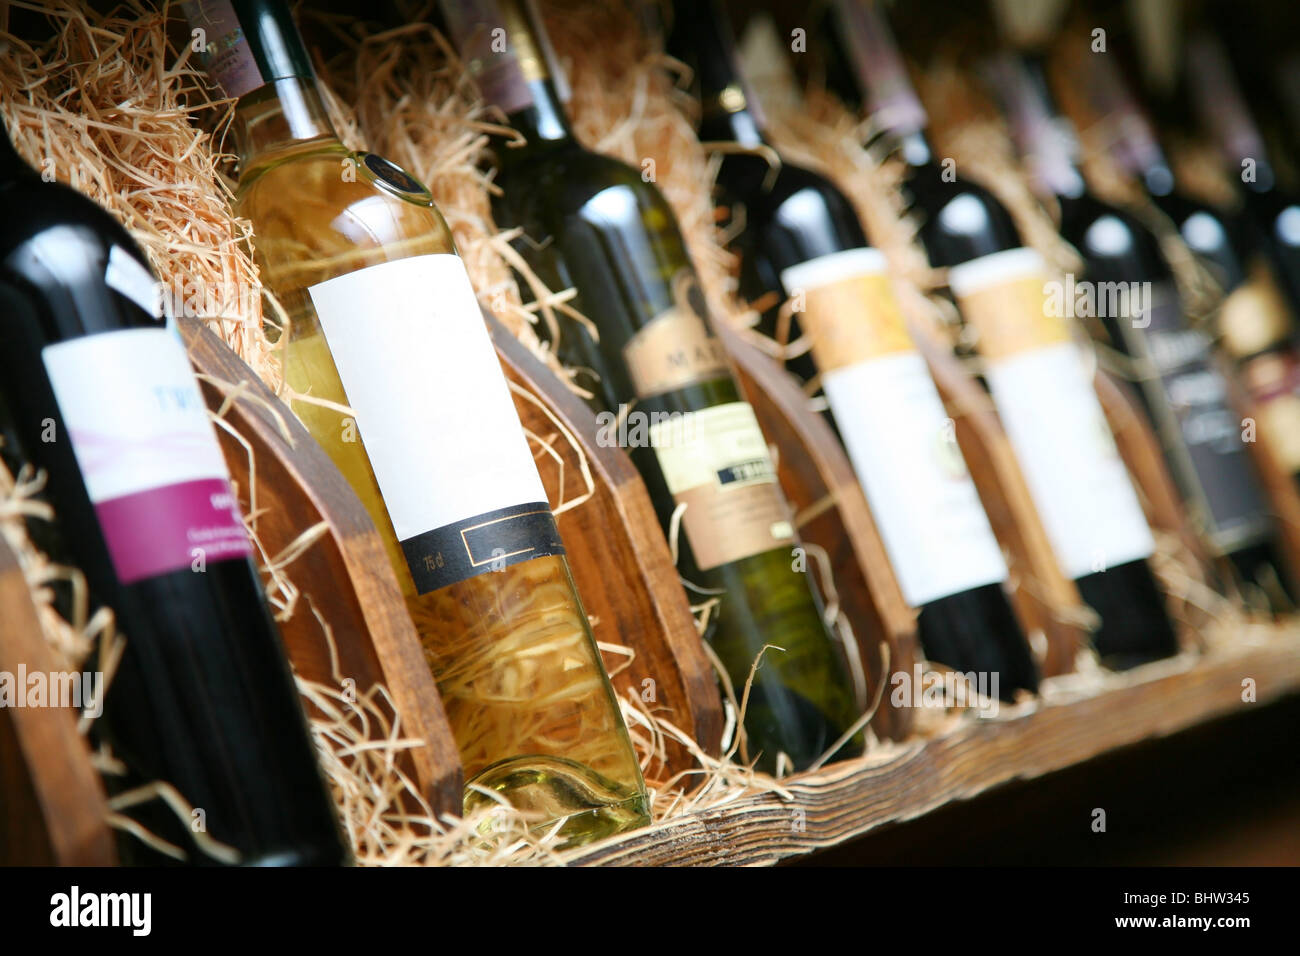 Closeup shot of wineshelf. Bottles lay over straw. Stock Photo